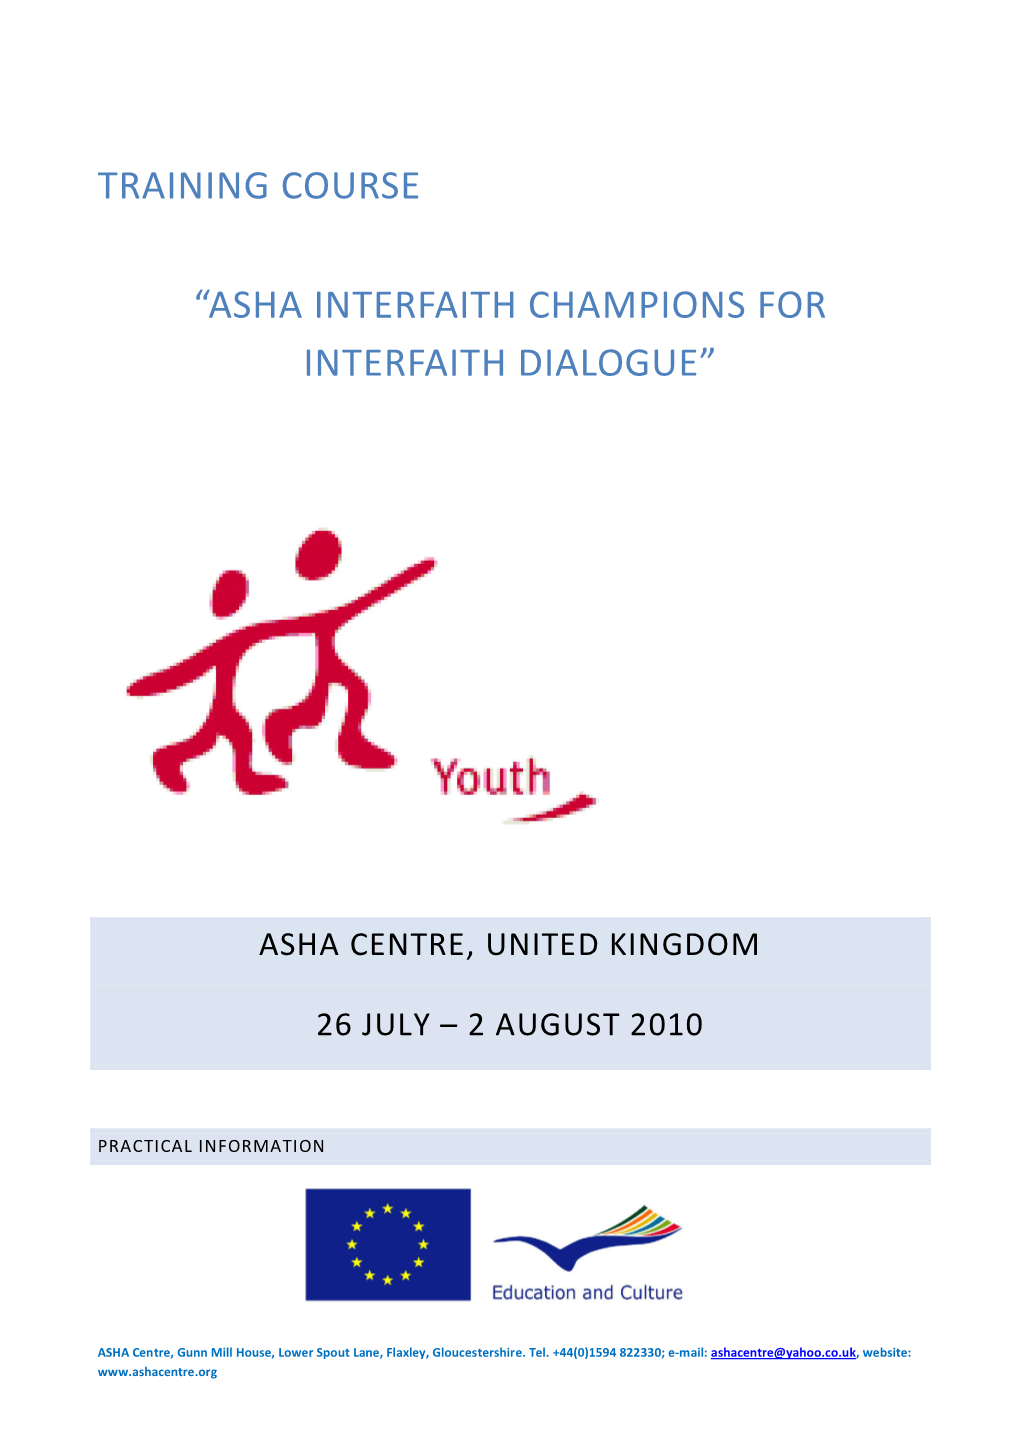 Asha Interfaith Champions for Interfaith Dialogue”